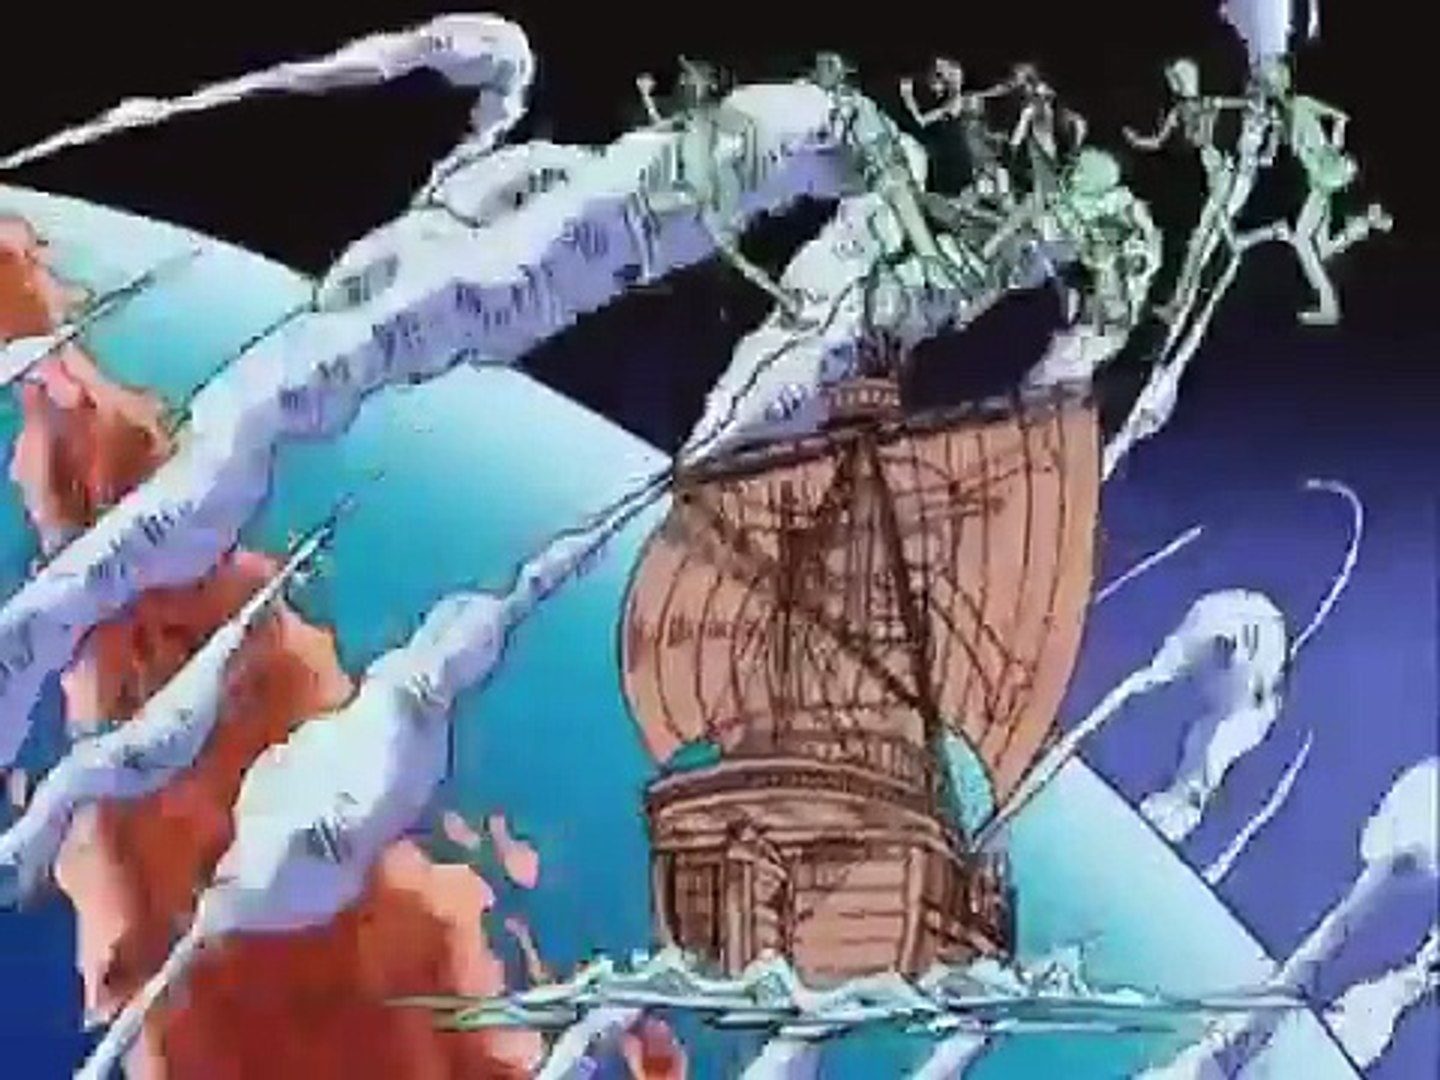 One Piece Opening 5 VOSTFR HD Kokoro no Chizu 